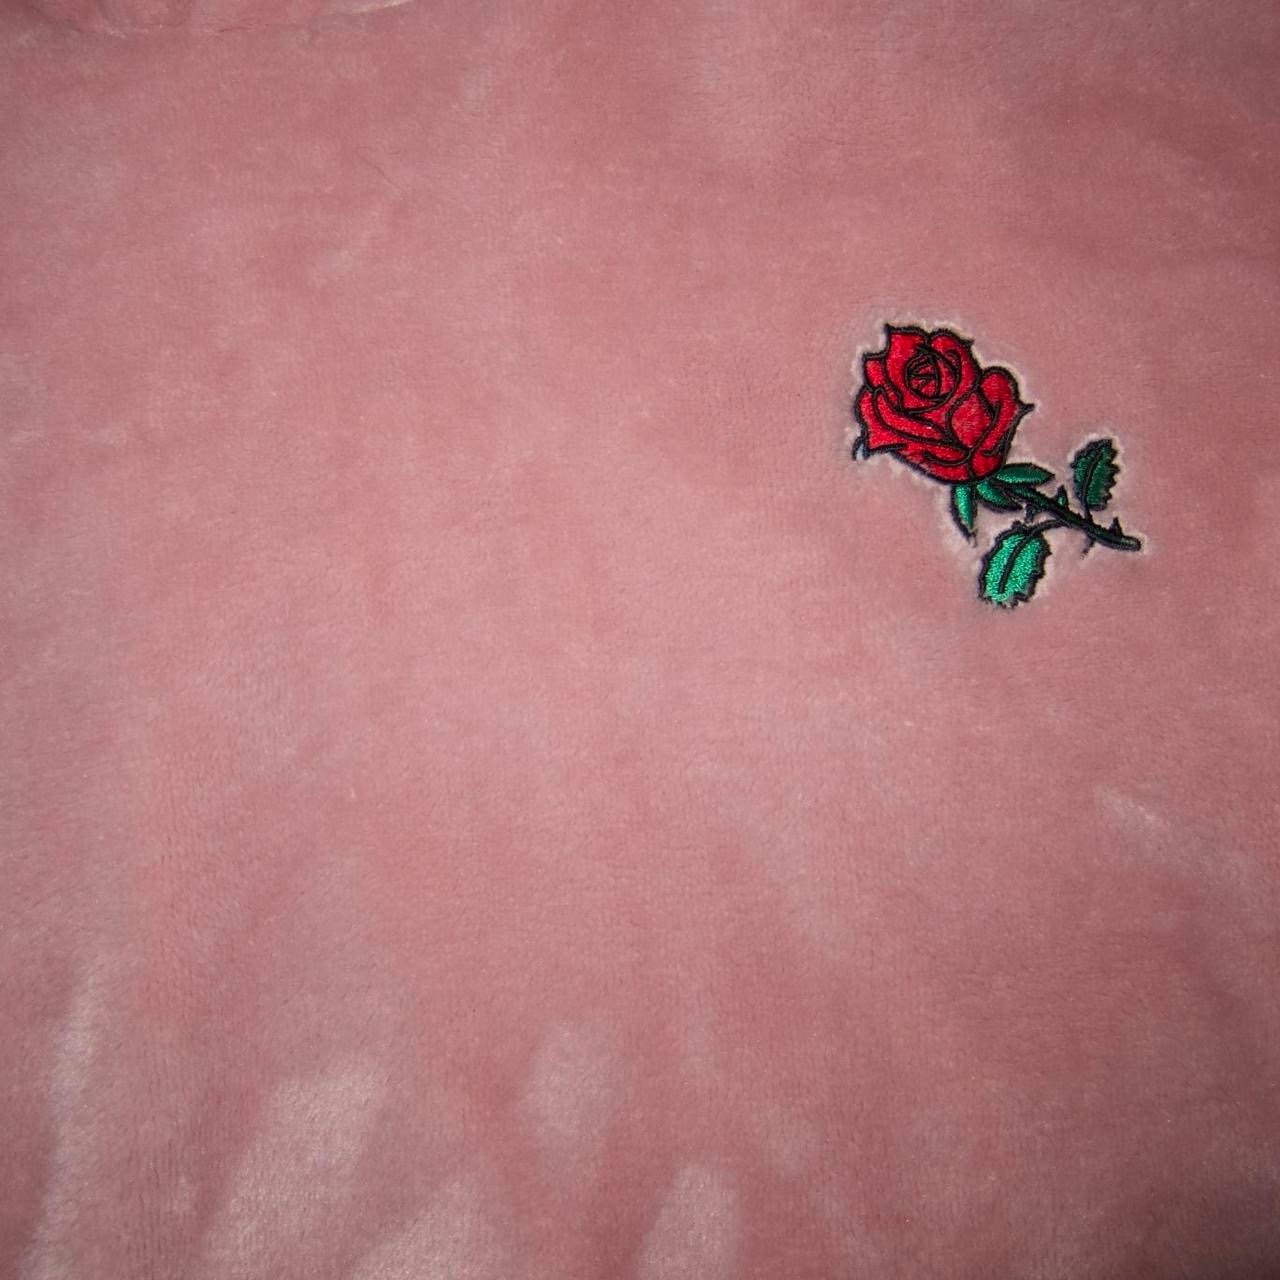 Comfortable Fuzzy Rose Embroidered Cropped drawstring sweatshirt isJot7qJ5 no tax